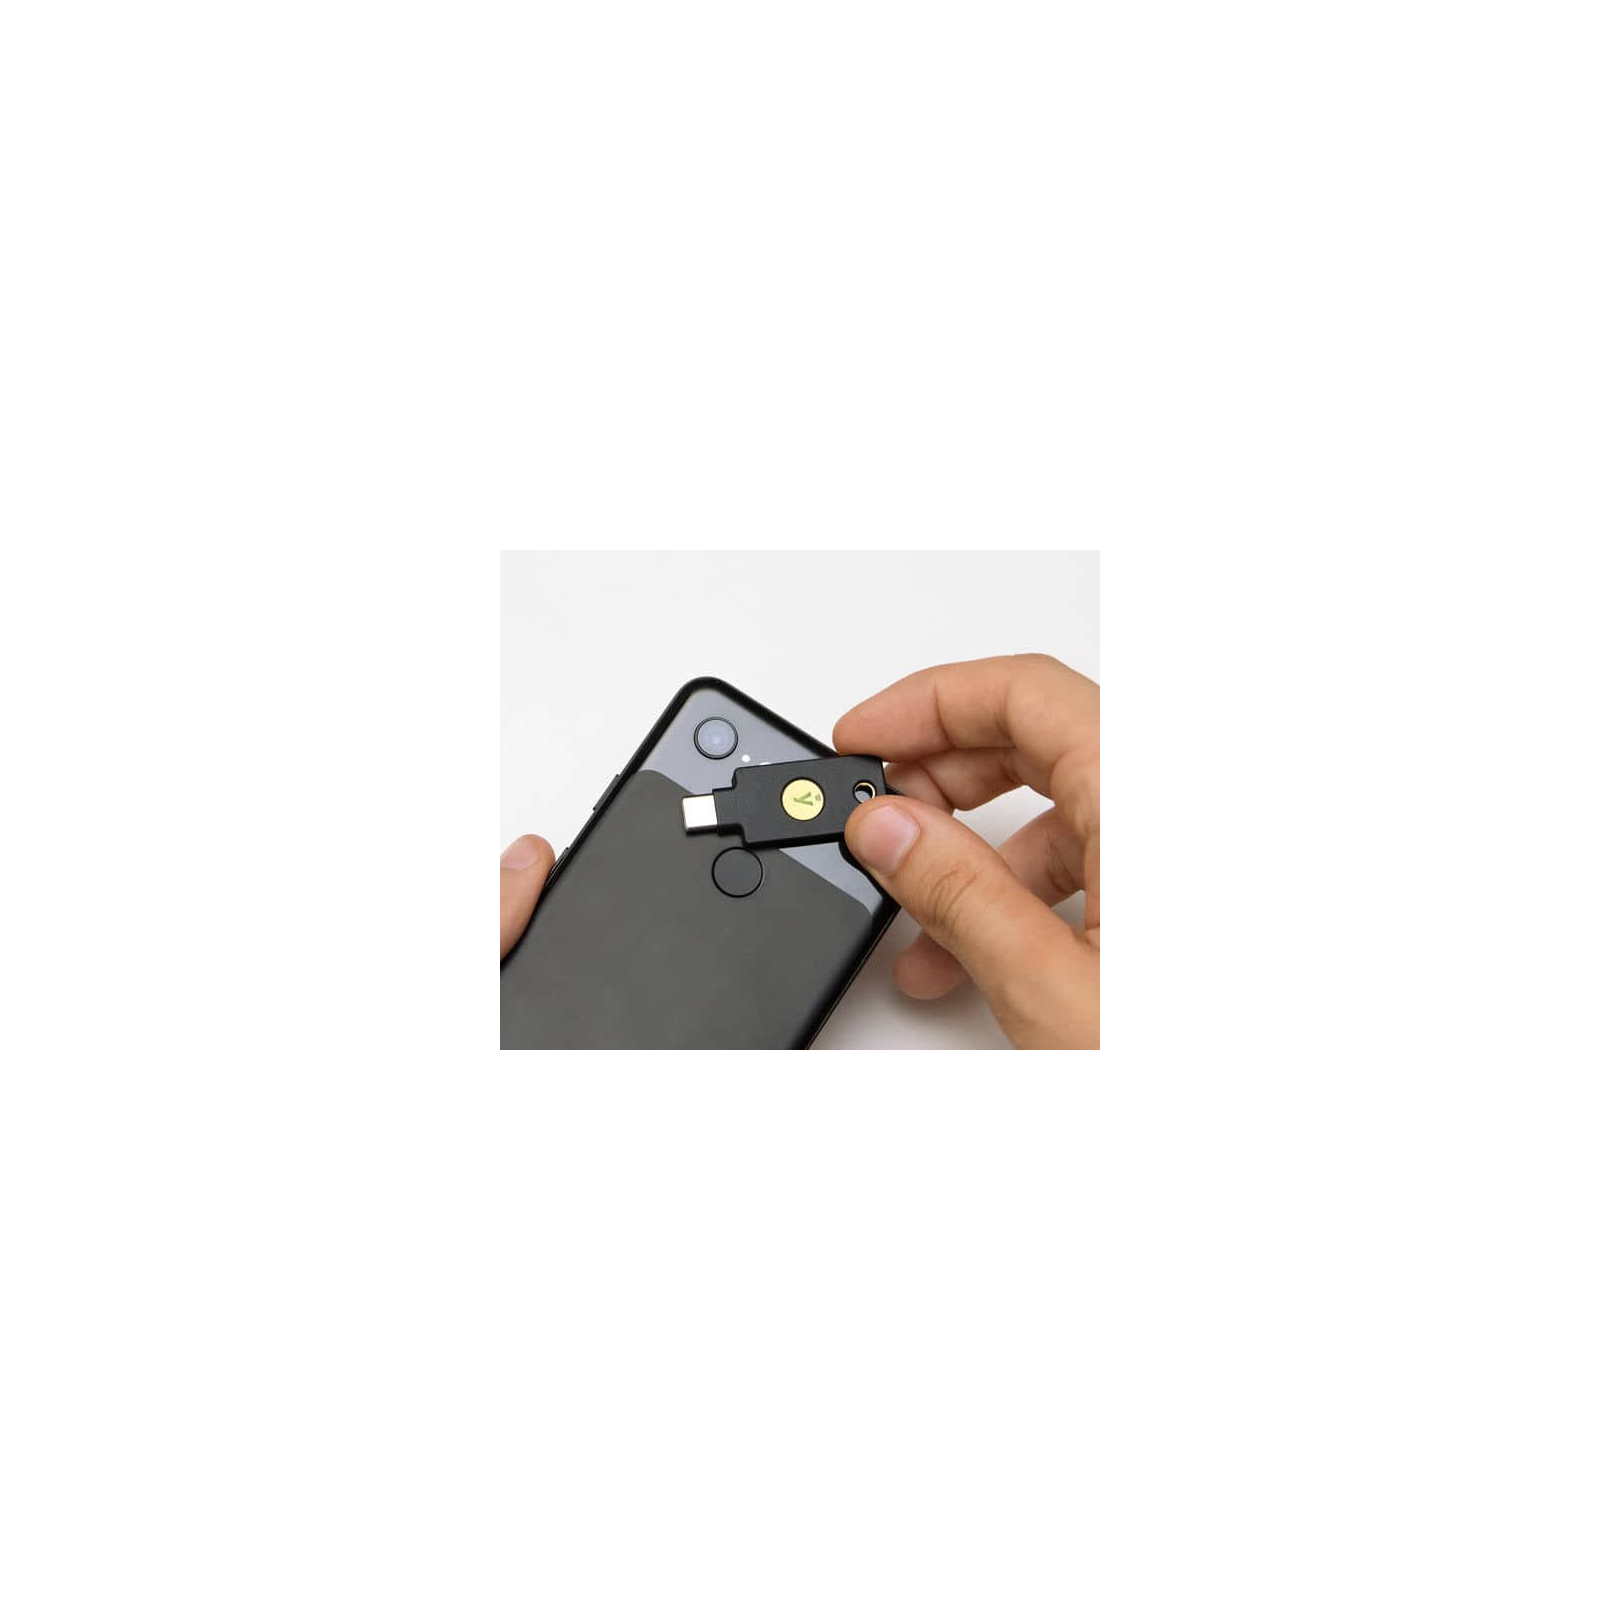 Аппаратный ключ безопасности Yubico YubiKey 5C NFC (YubiKey_5C_NFC) изображение 4